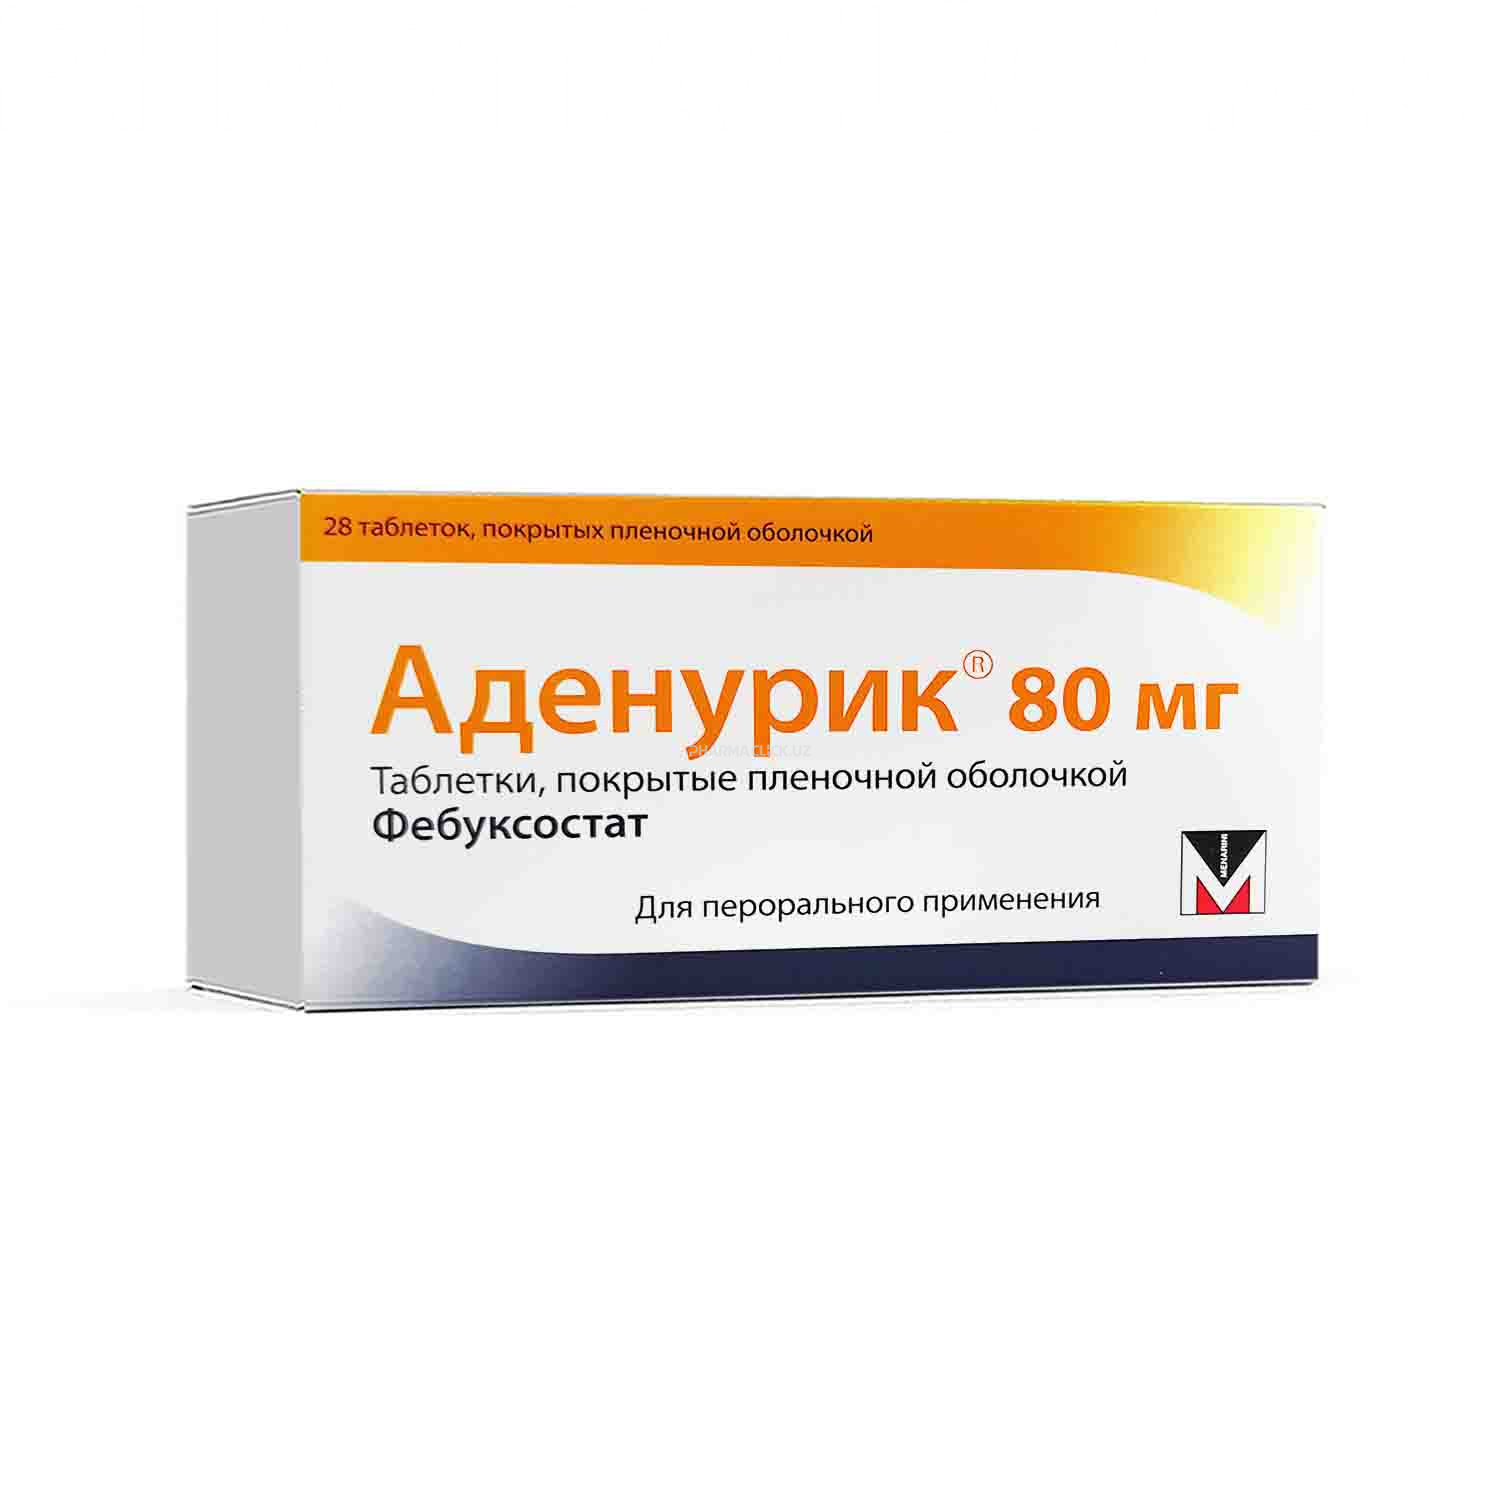 Adenurik tab. 80 mg №28